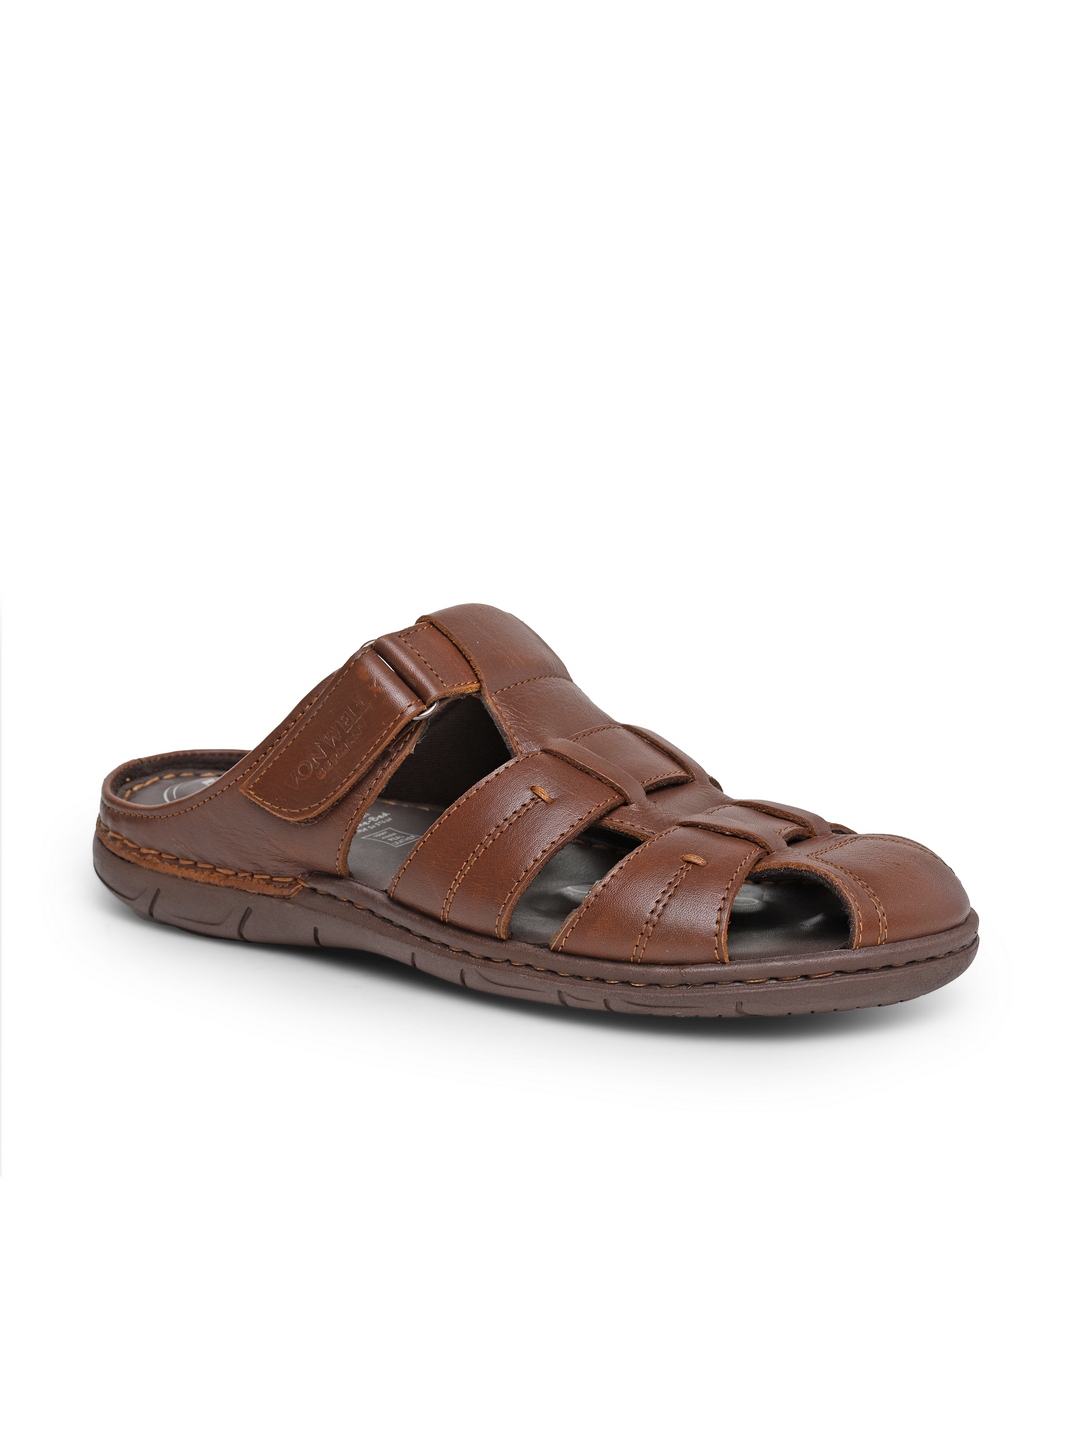 VON WELLX GERMANY comfort men's tan sandal DAVIS